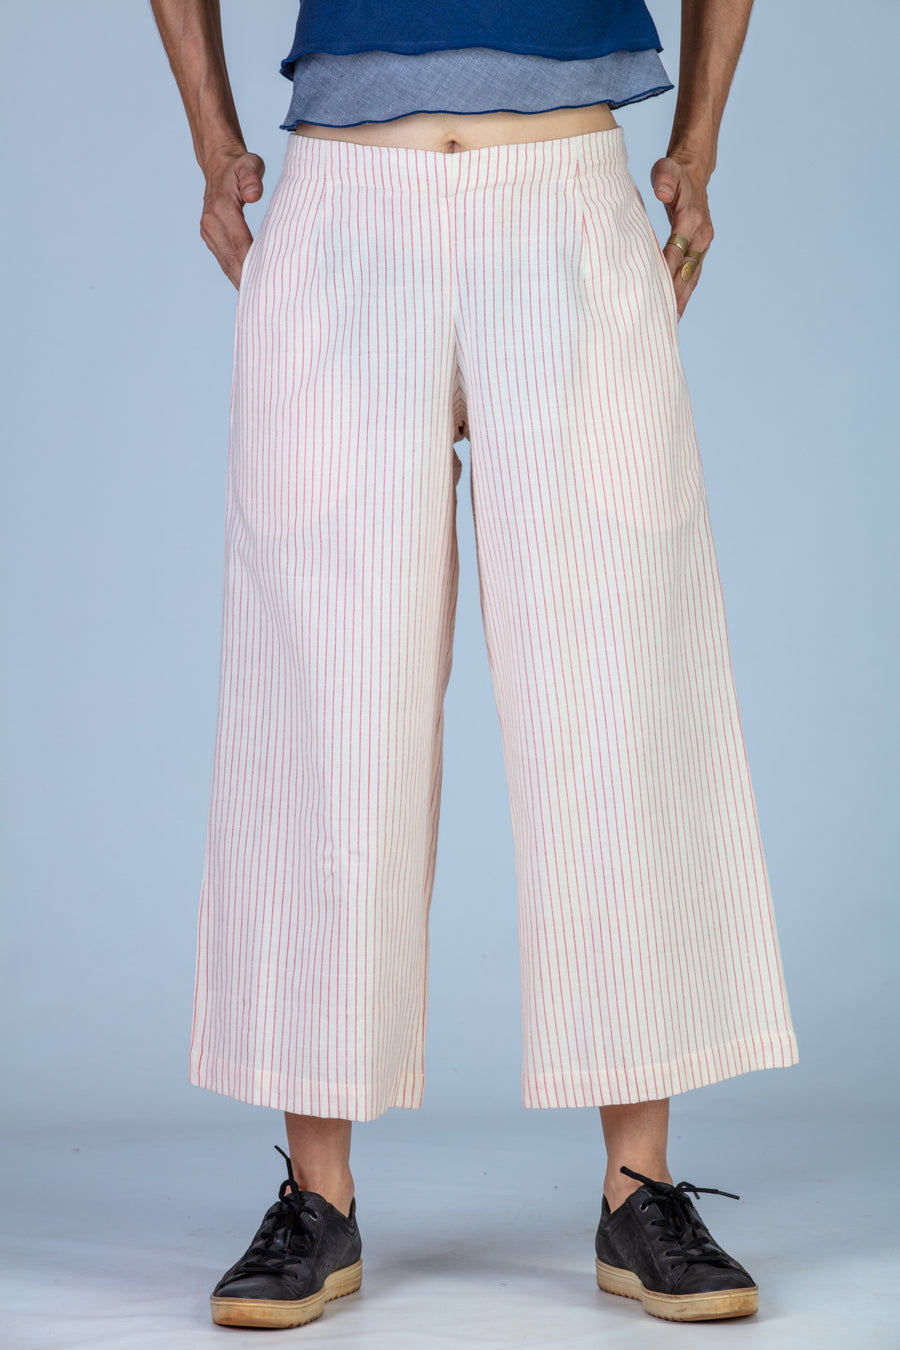 Red striped Organic cotton Pants - NILA - Upasana Design Studio